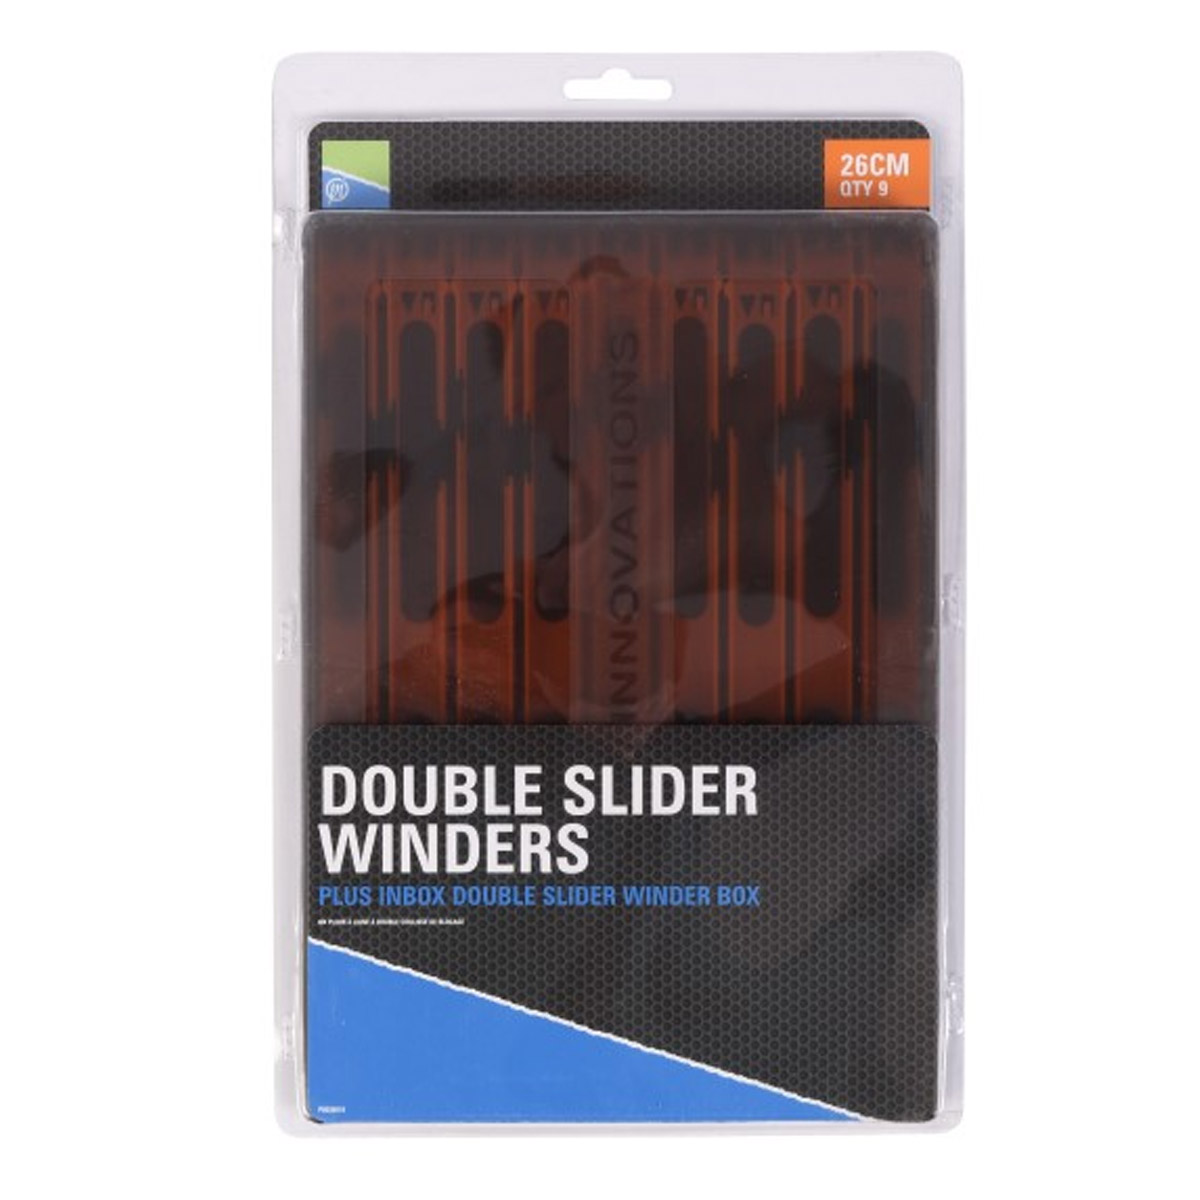 Preston Innovations Double Slider Winders In Box 26 CM